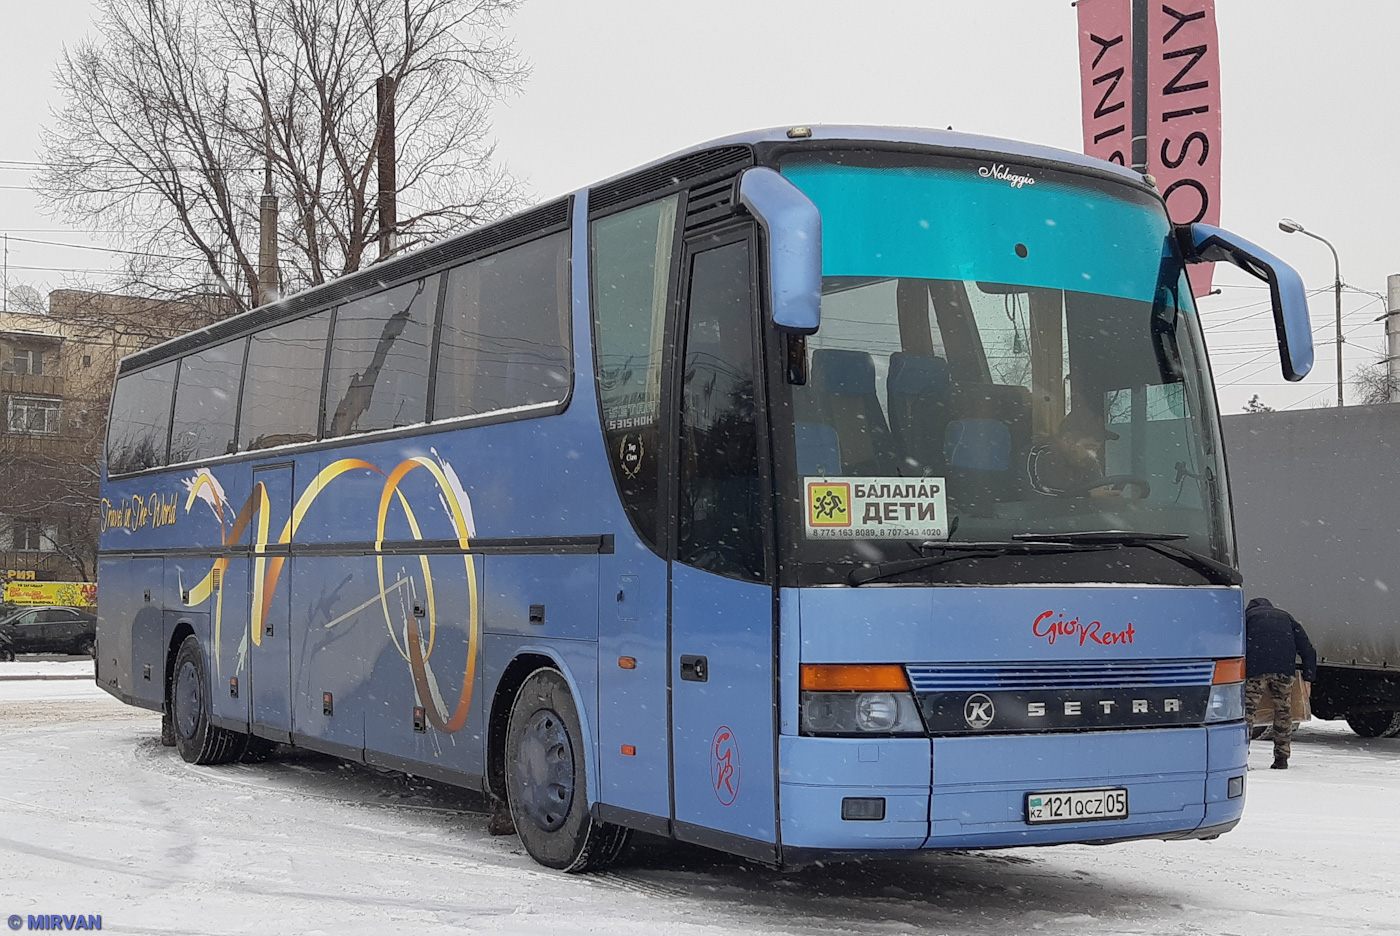 Almaty, Setra S315HDH/2 Nr. 121 QCZ 05